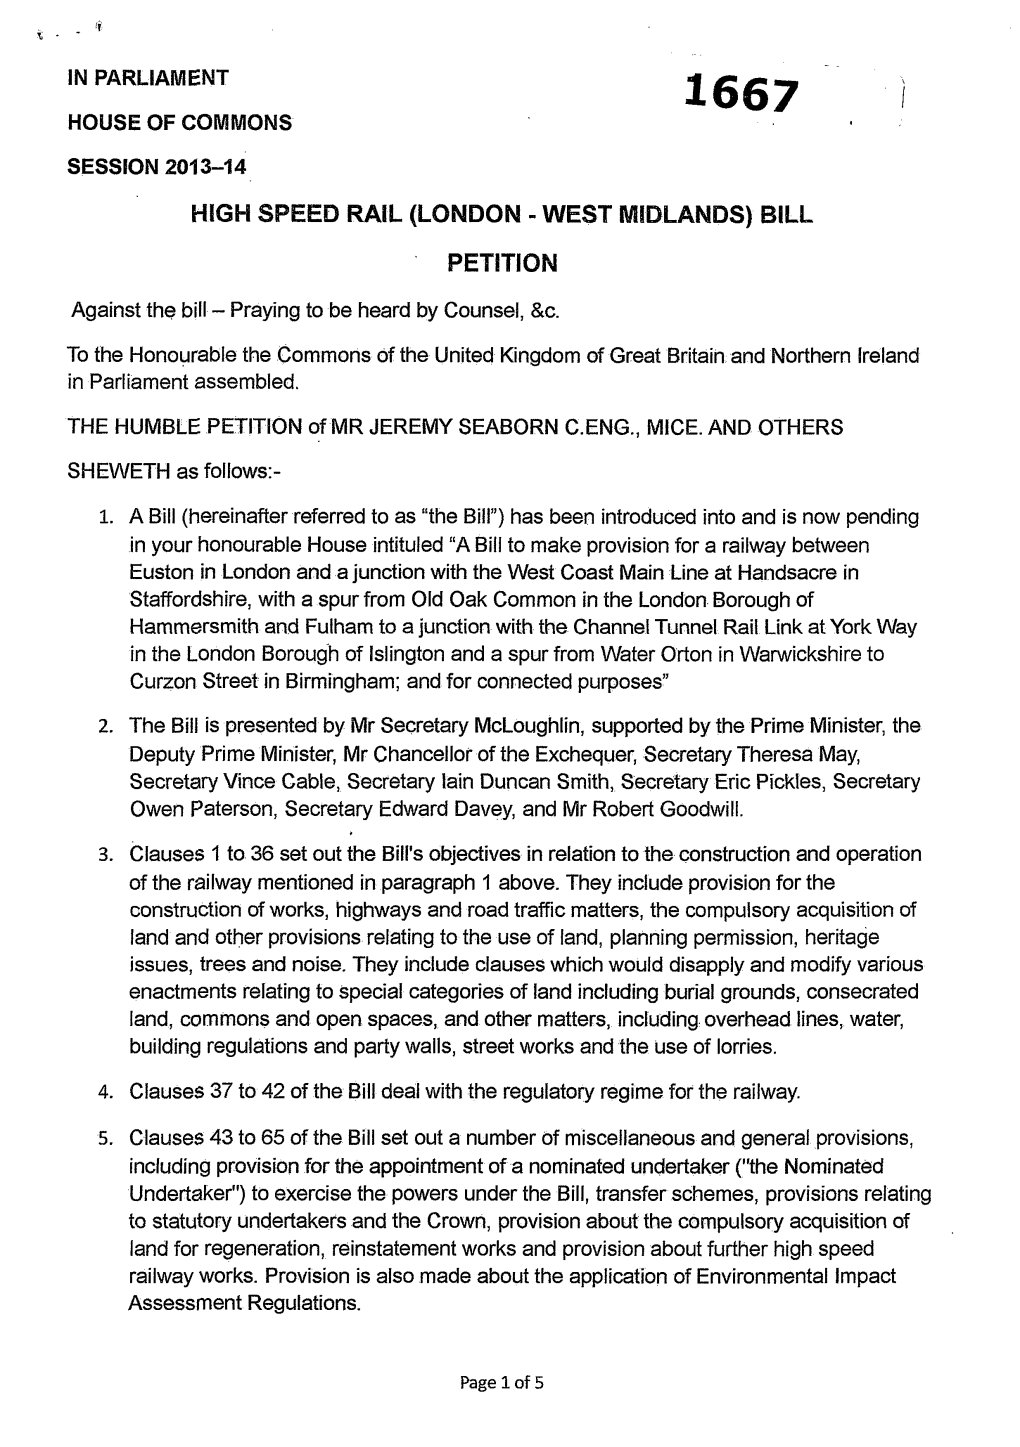 High Speed Rail (London - West Wiidlands) Bill Petition